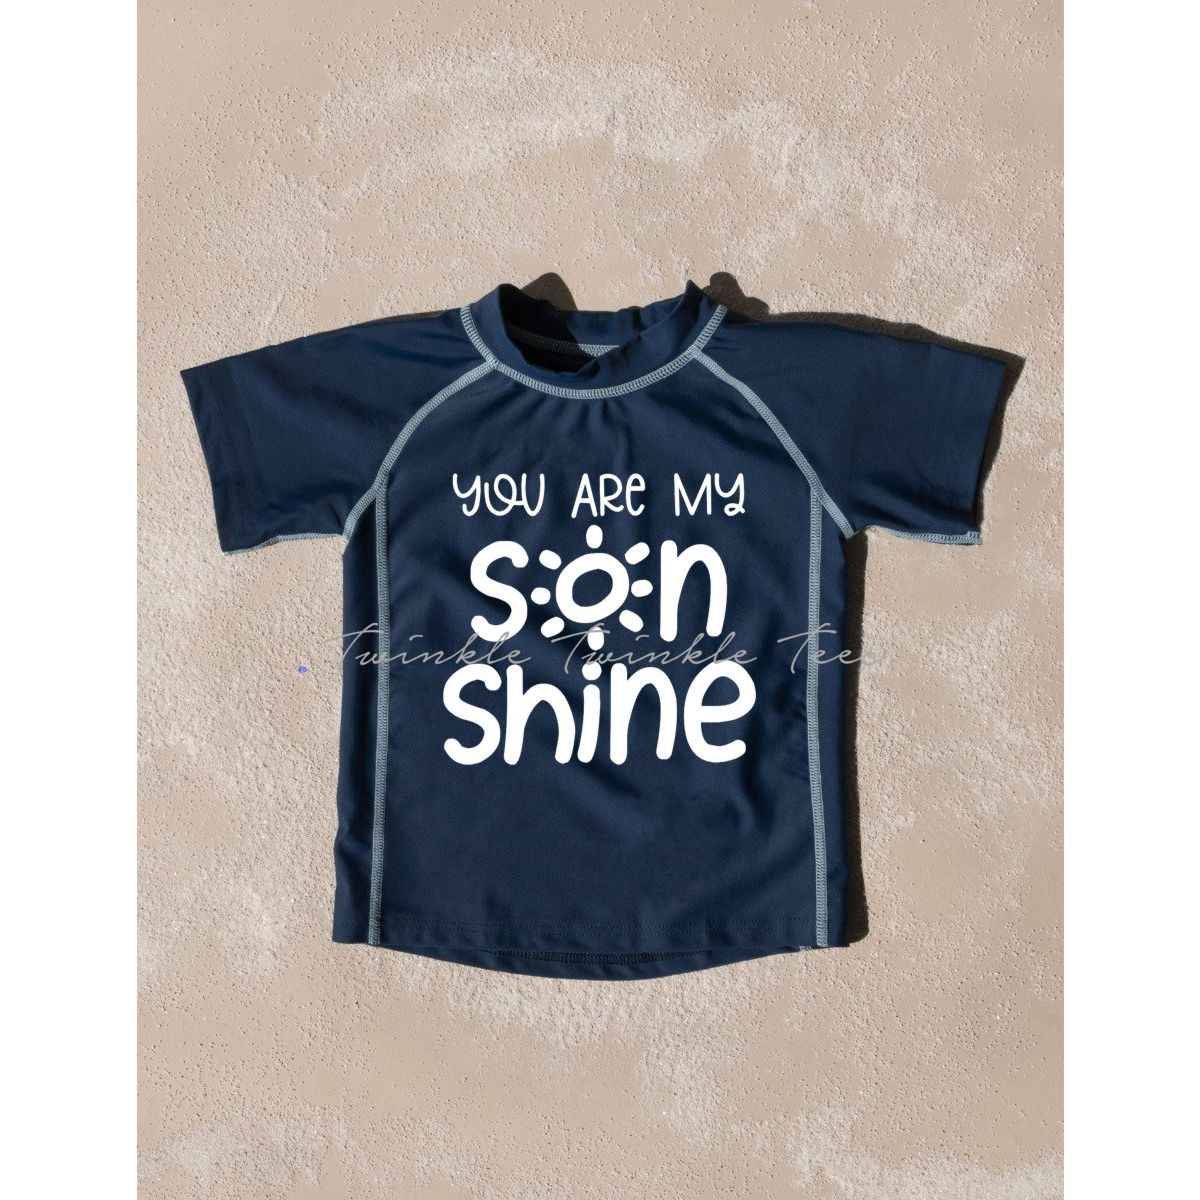 You are My SonShine Toddler Rashguard Swimwear UV Protection +50 - Boys Summer Swimsuit - Toddler Boy Rash Guard - Gift for Grandson